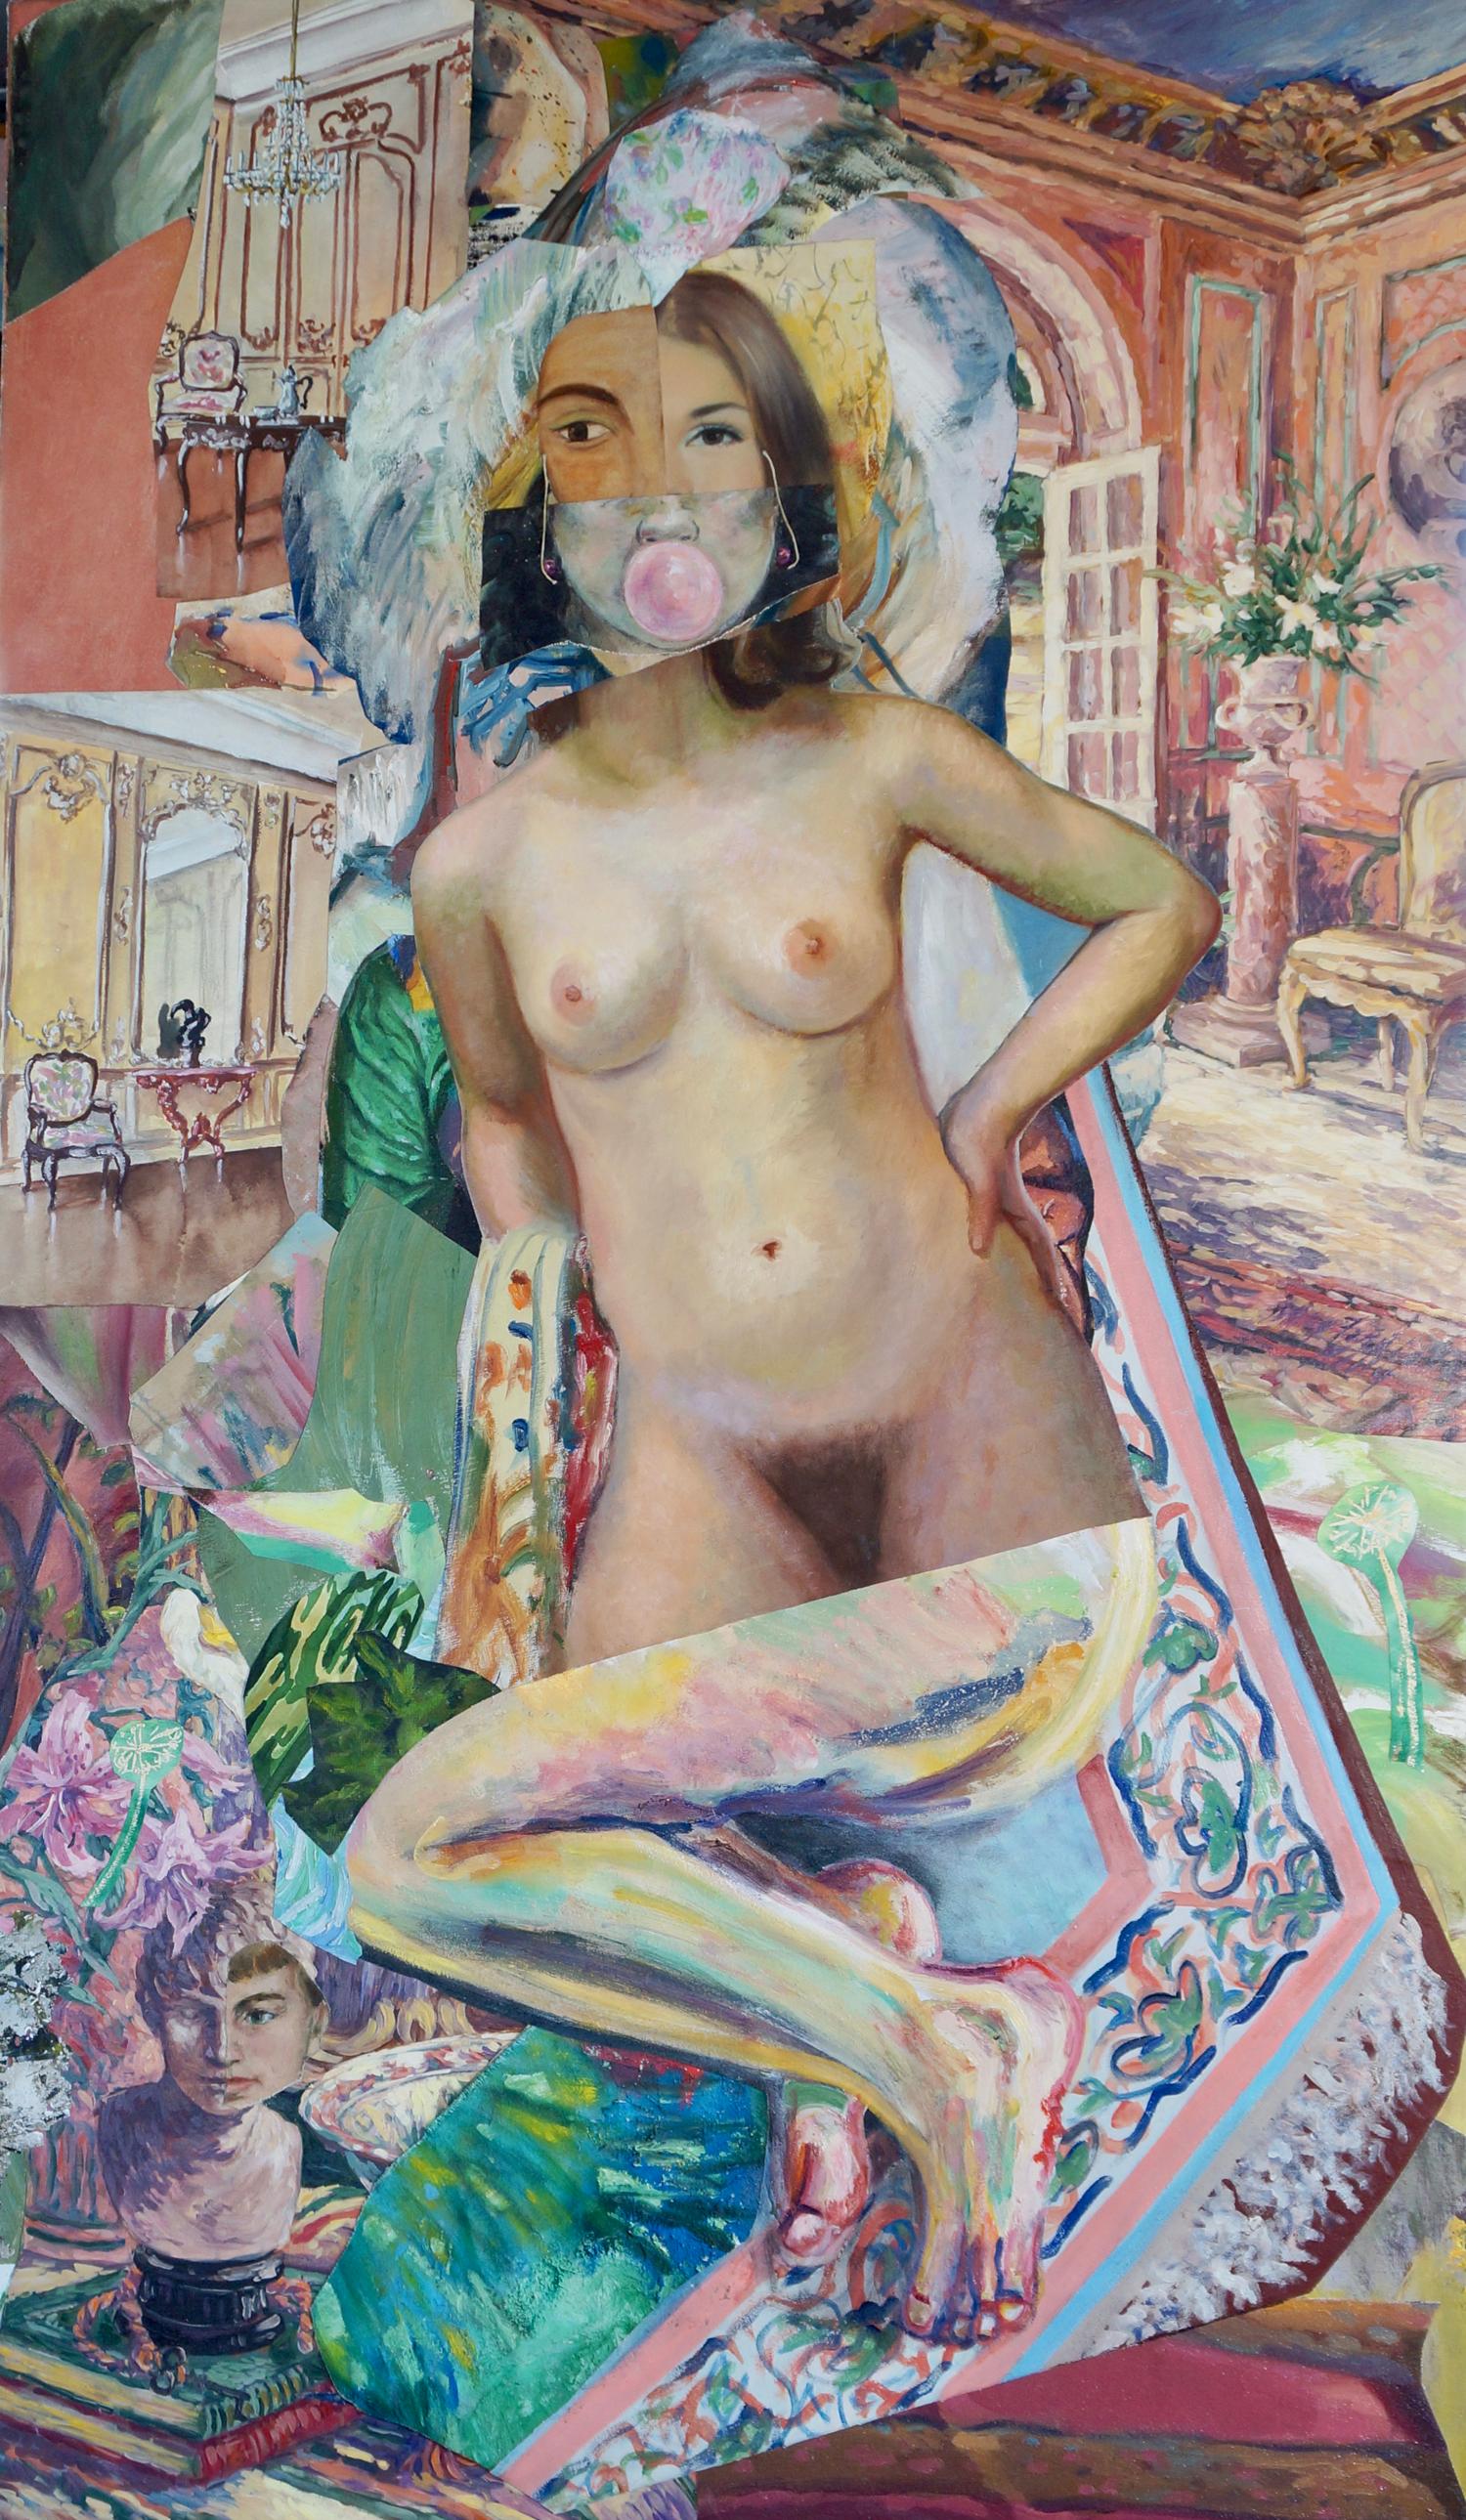 John Baker Portrait Painting - "Bubblegum Girl", portrait, collage, pink, green, sassy, acrylic painting